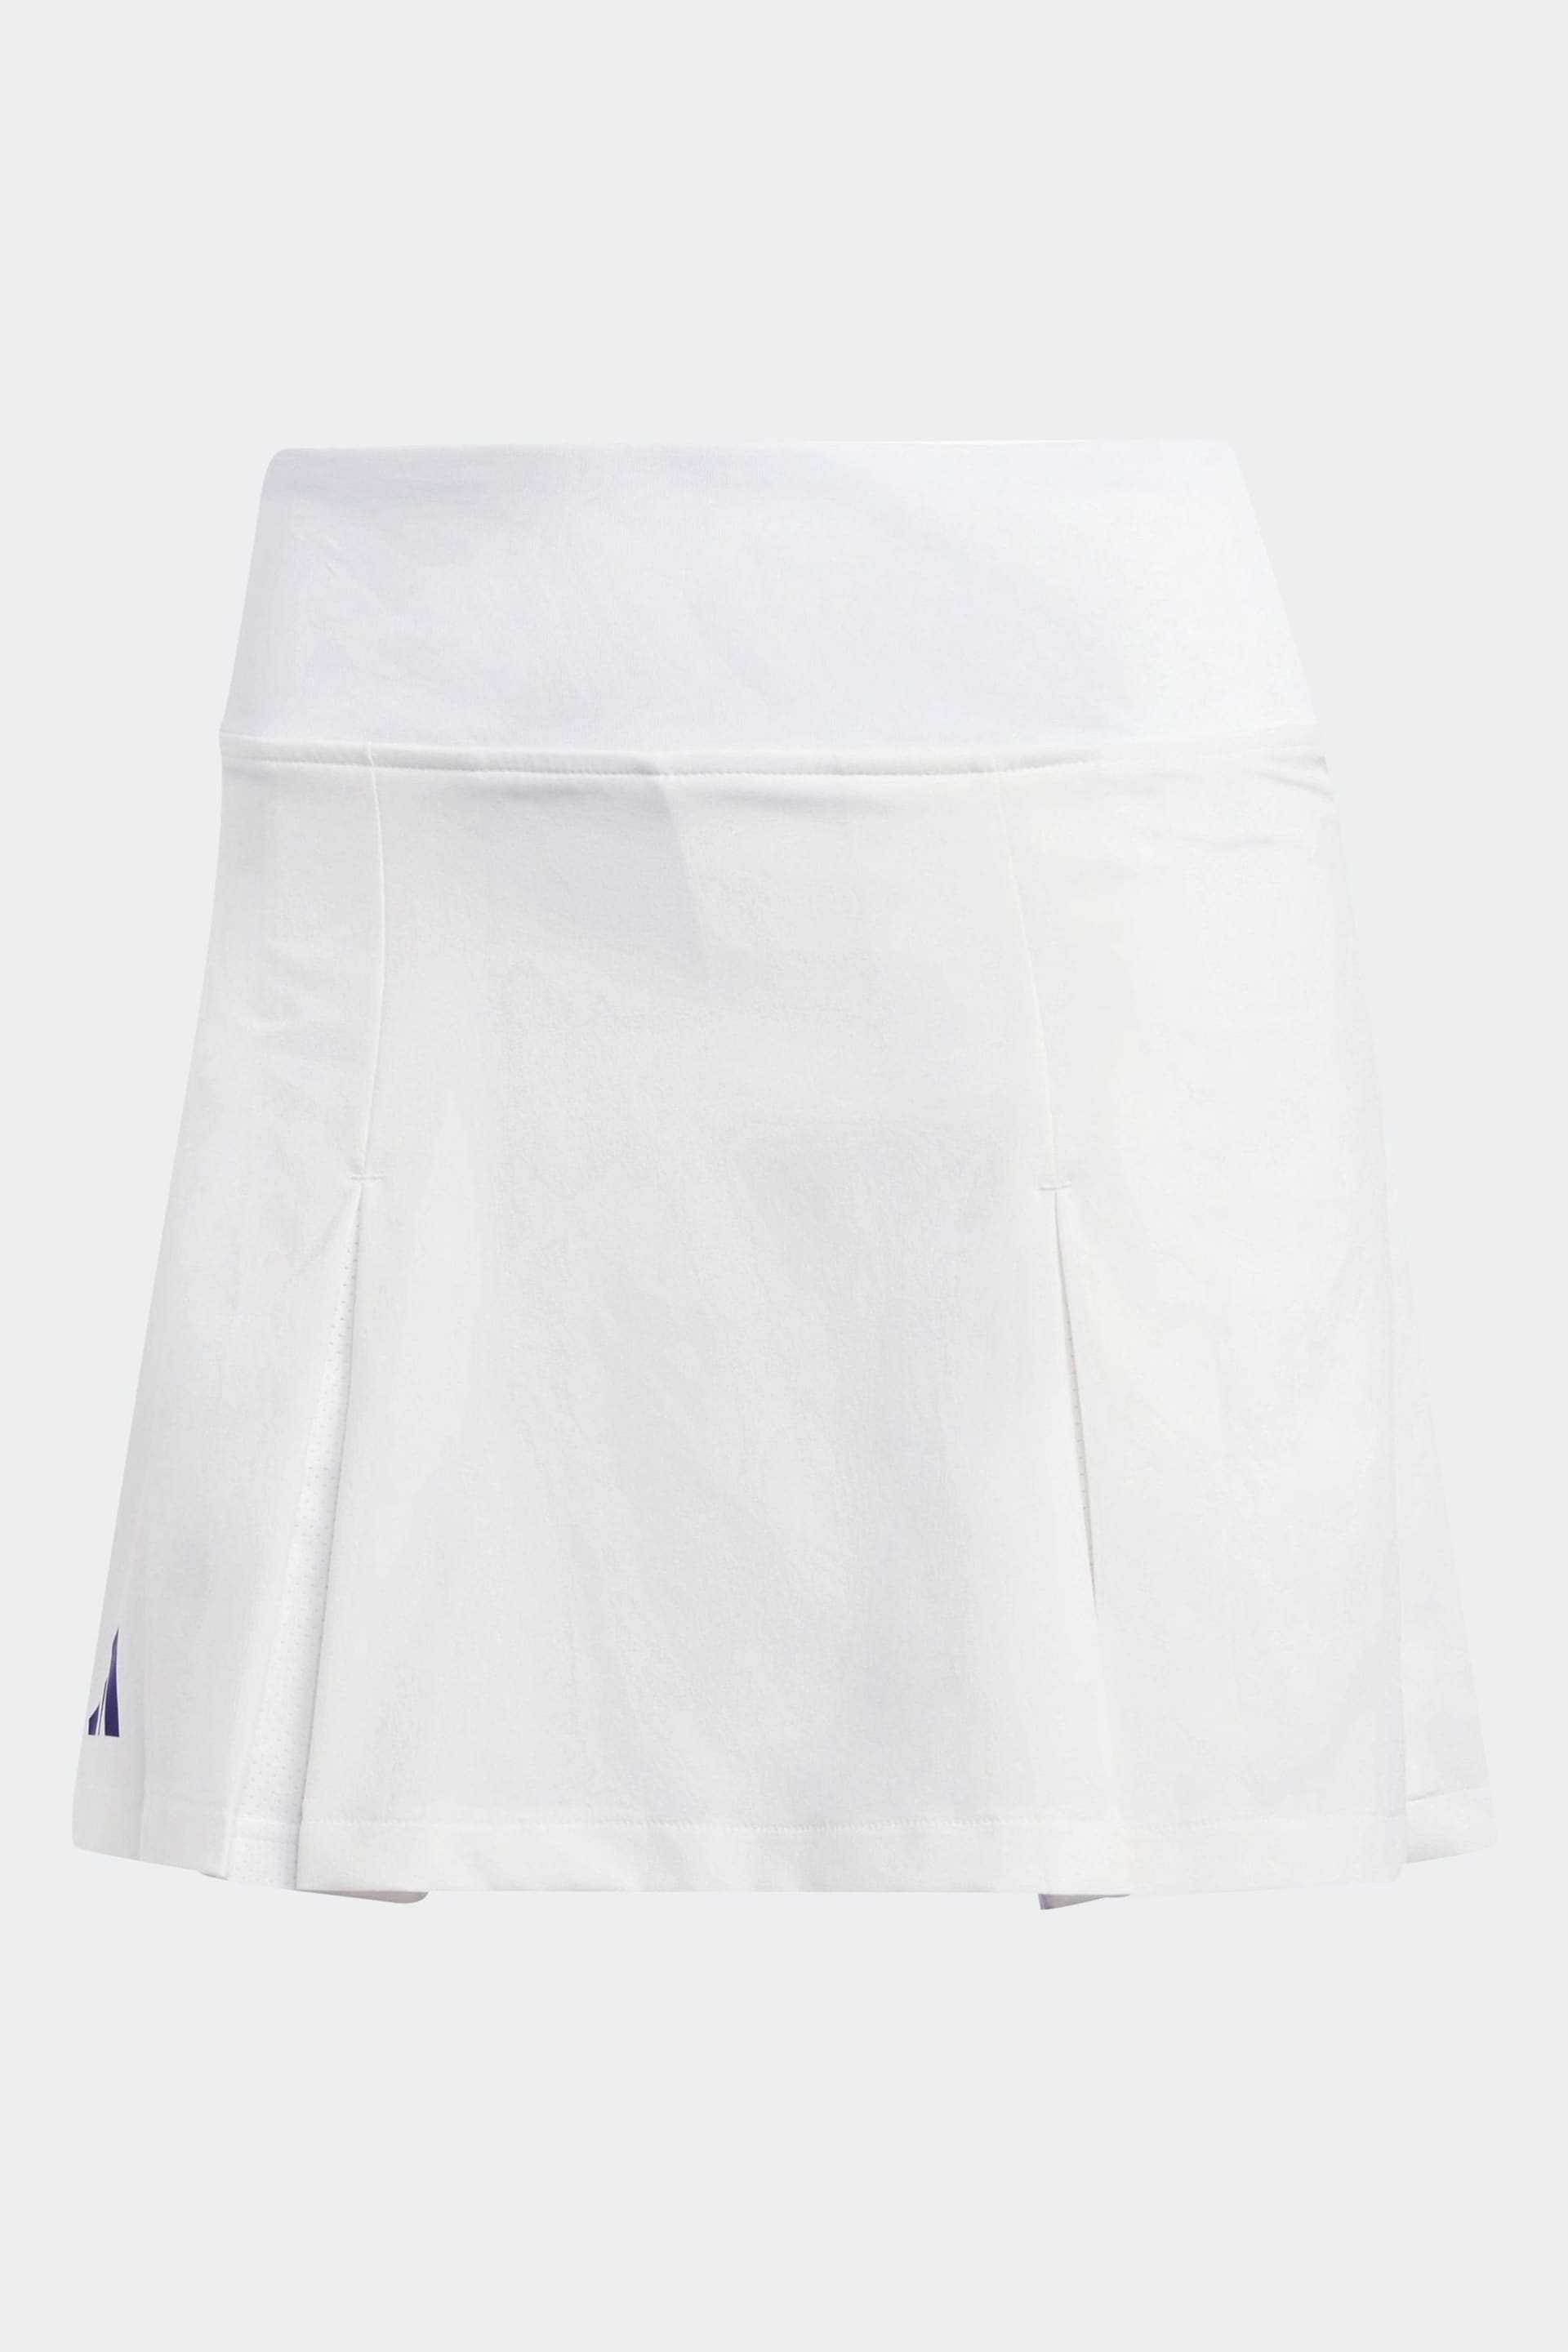 adidas White Tennis Club Pleated Skirt - Image 5 of 6